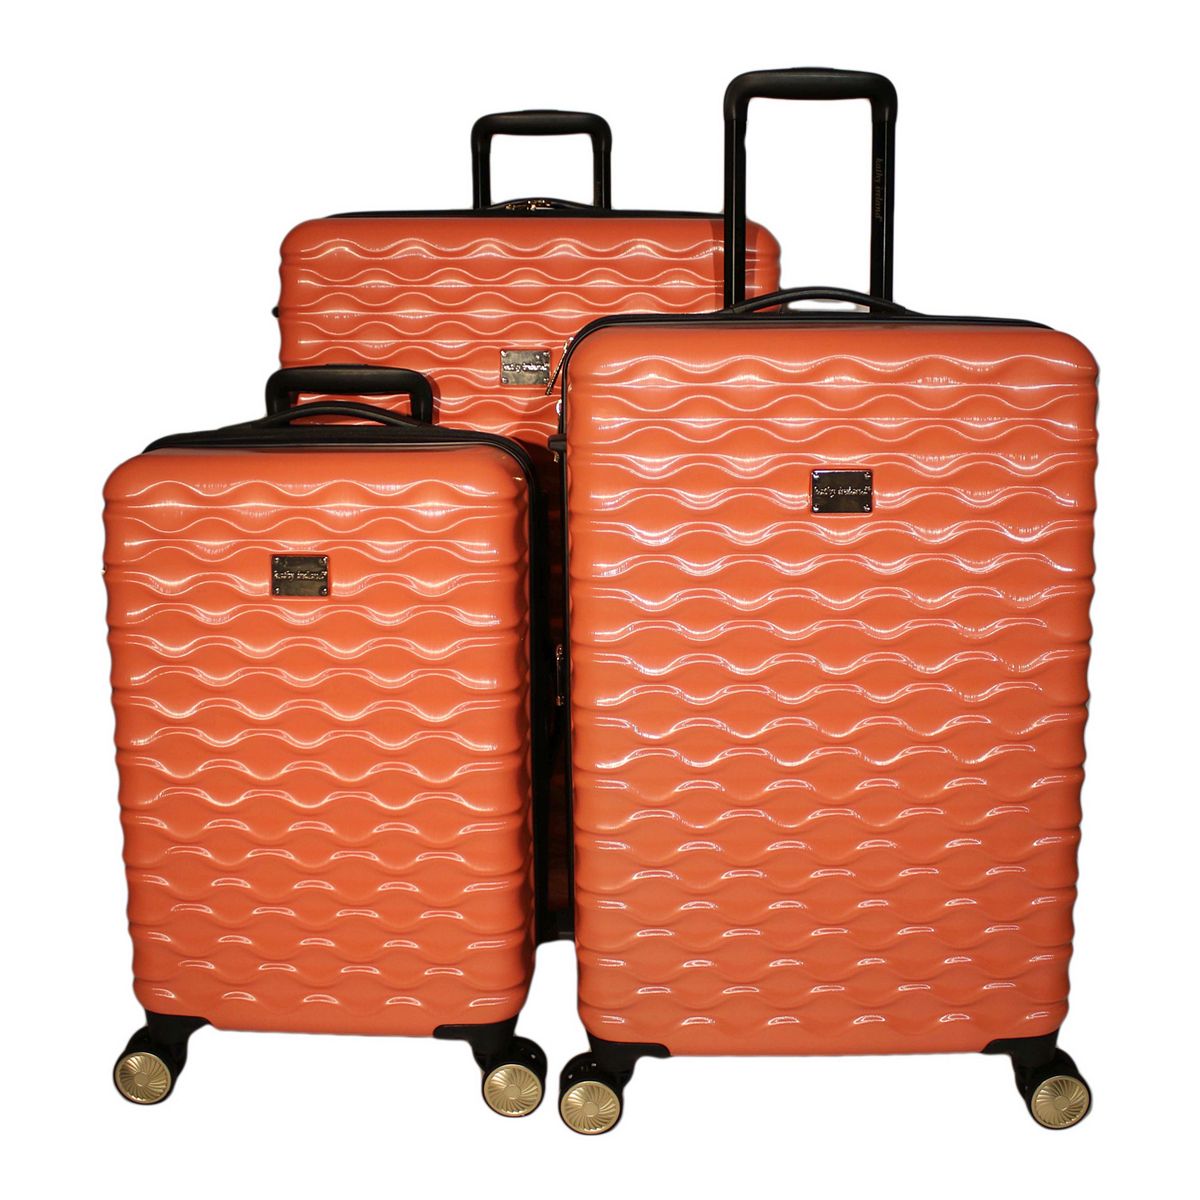 Picture of Kathy Ireland KI115-ST3-CRL Maisy Hardside Spinner Luggage Set, Coral - 3 Piece